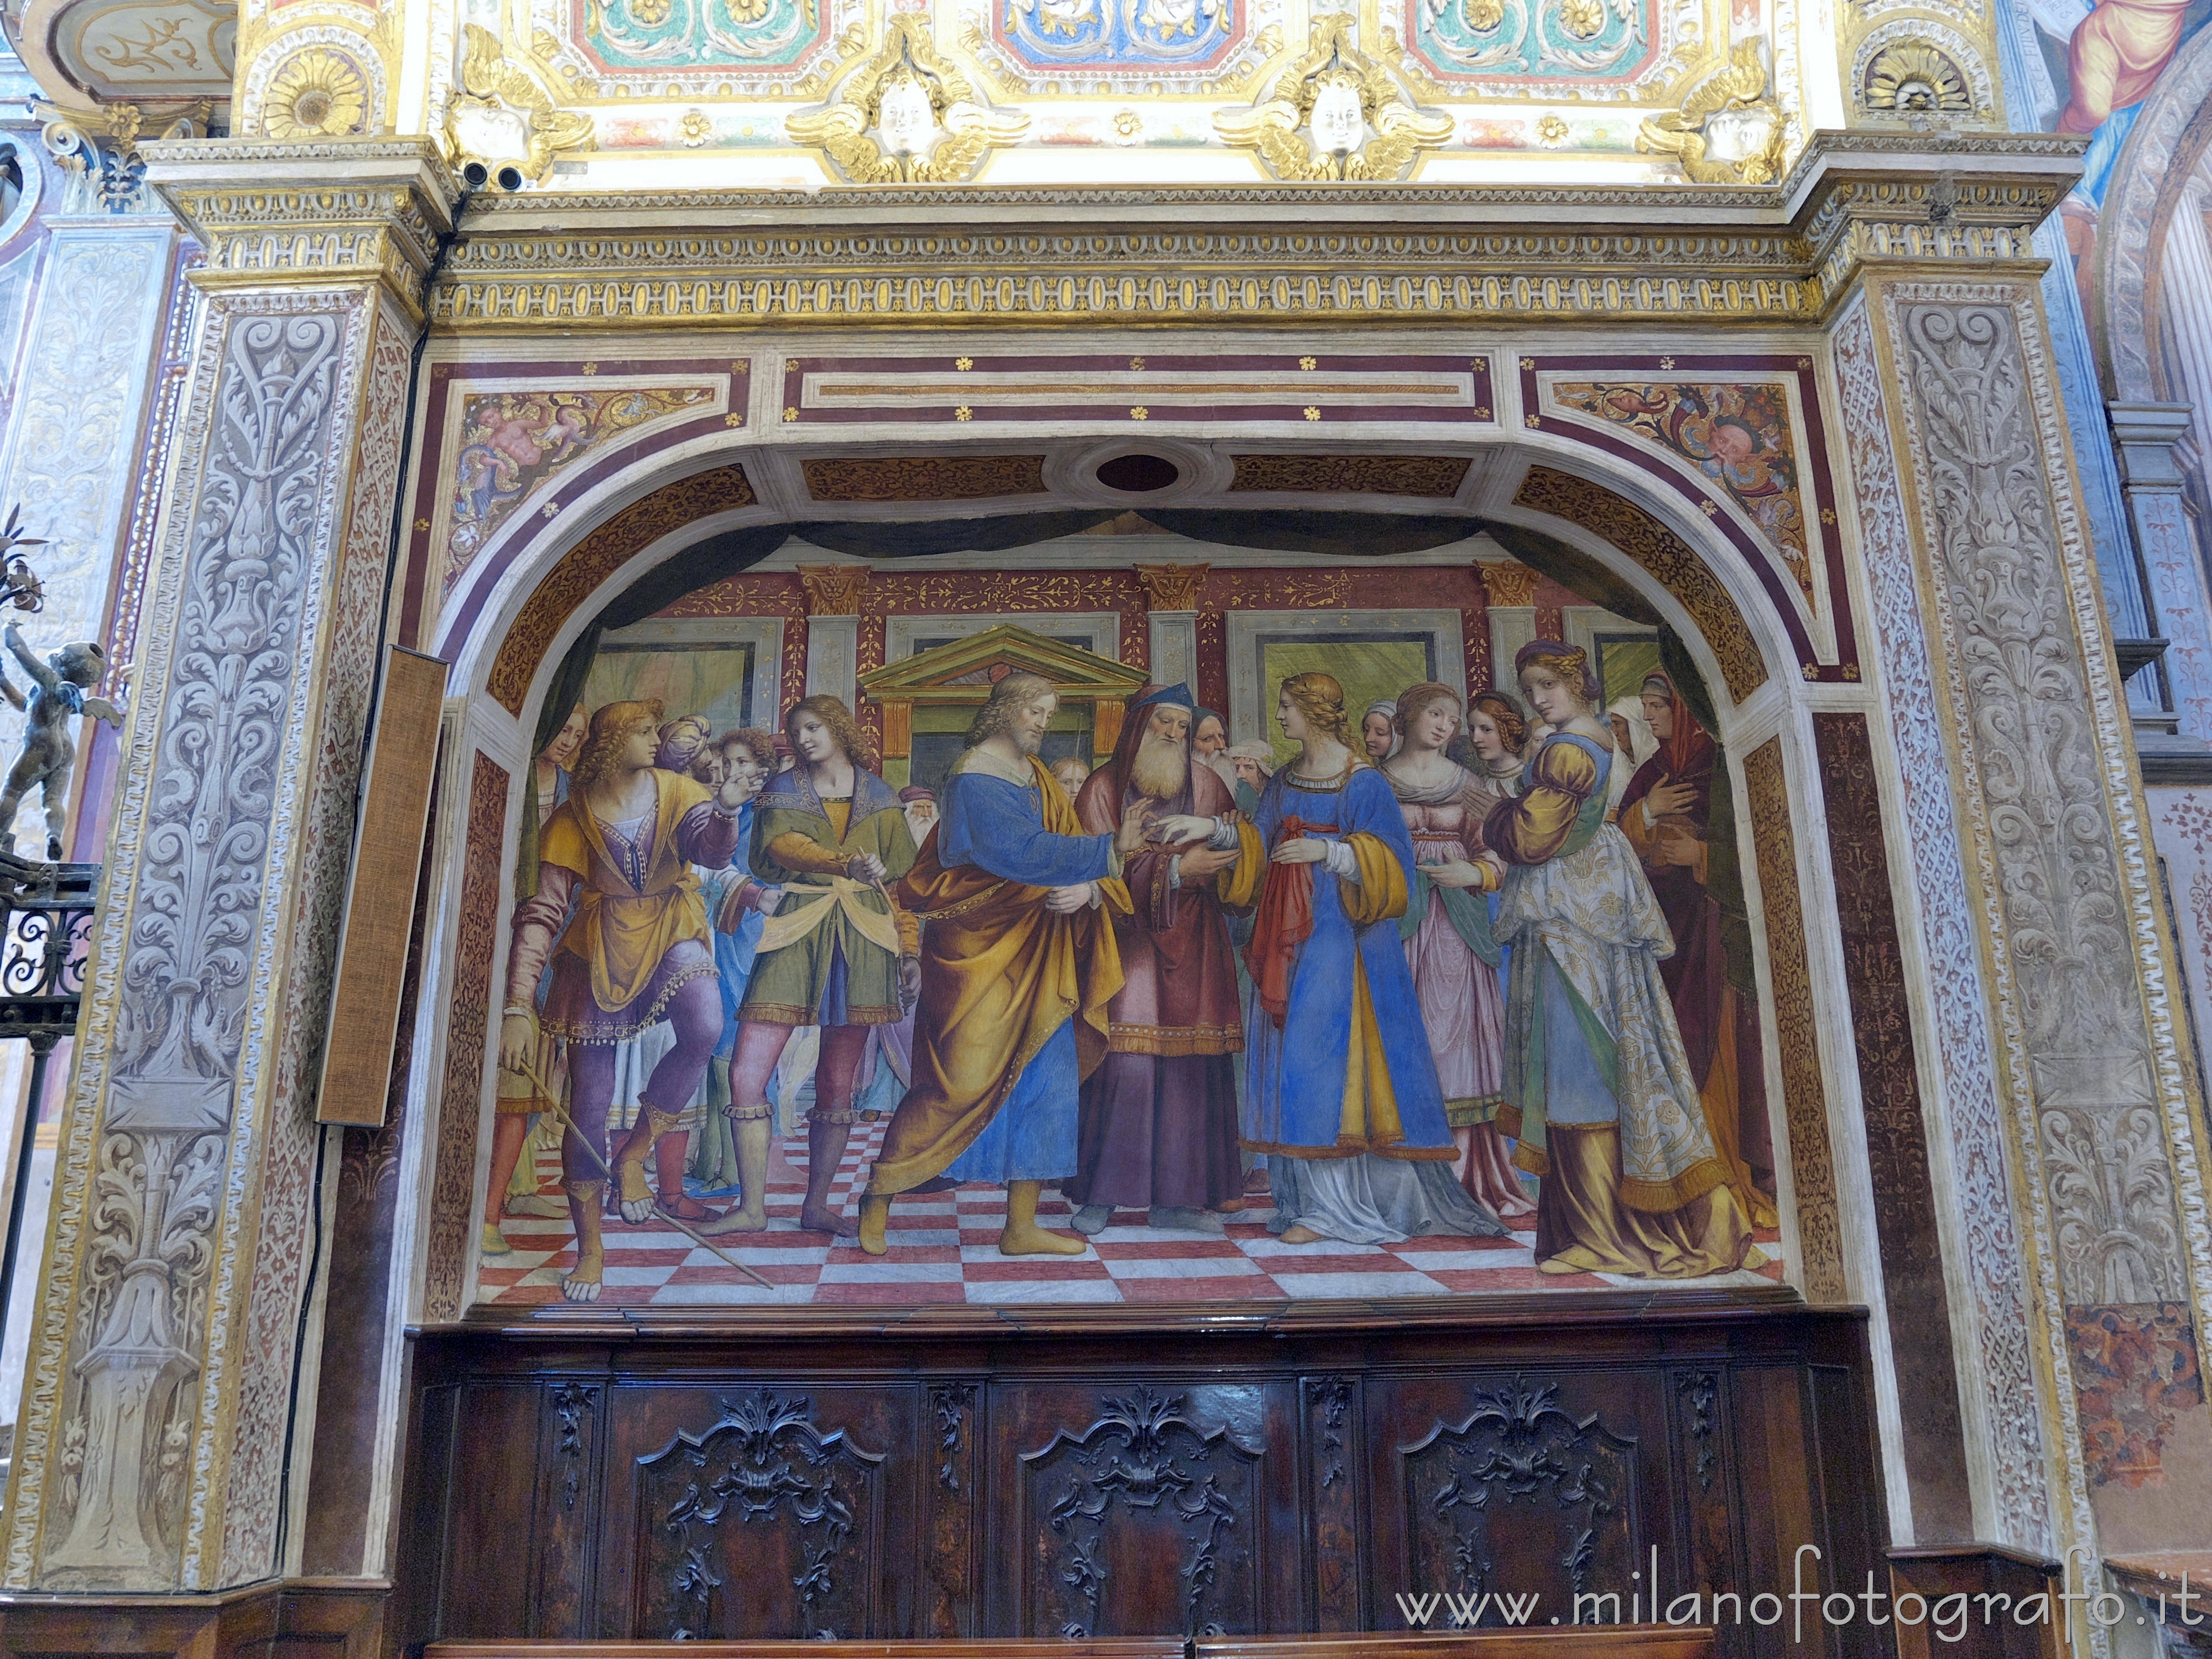 Saronno (Varese, Italy): Wedding of the Virgin in the Sanctuary of Santa Maria dei Miracoli - Saronno (Varese, Italy)